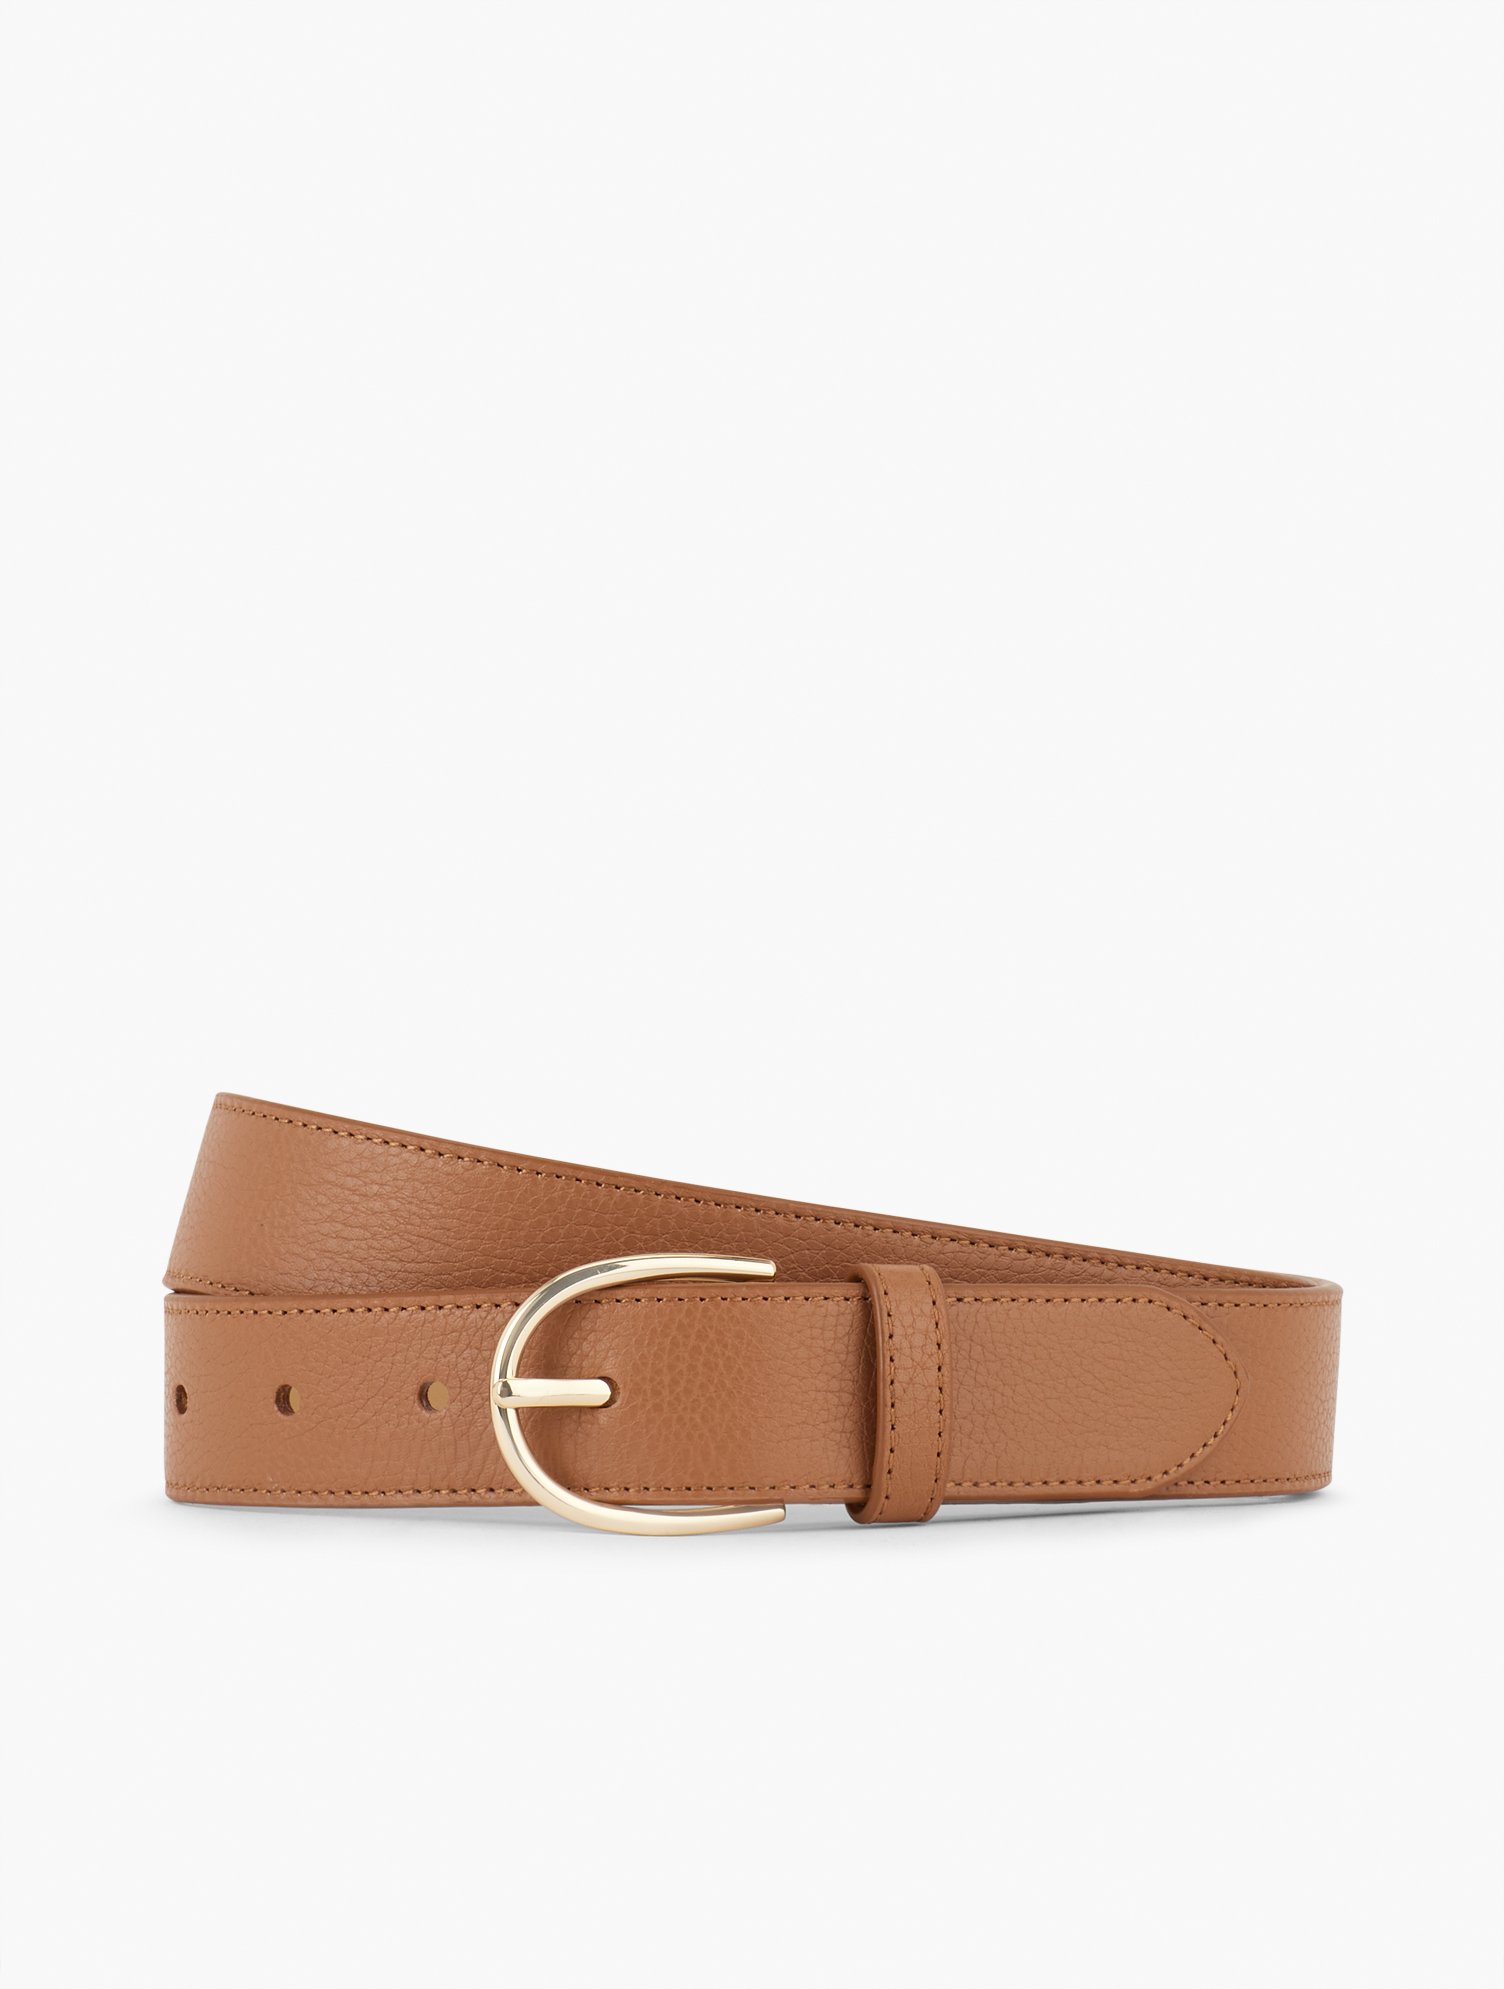 Talbots Leather Belt - Havana Tan - Xl